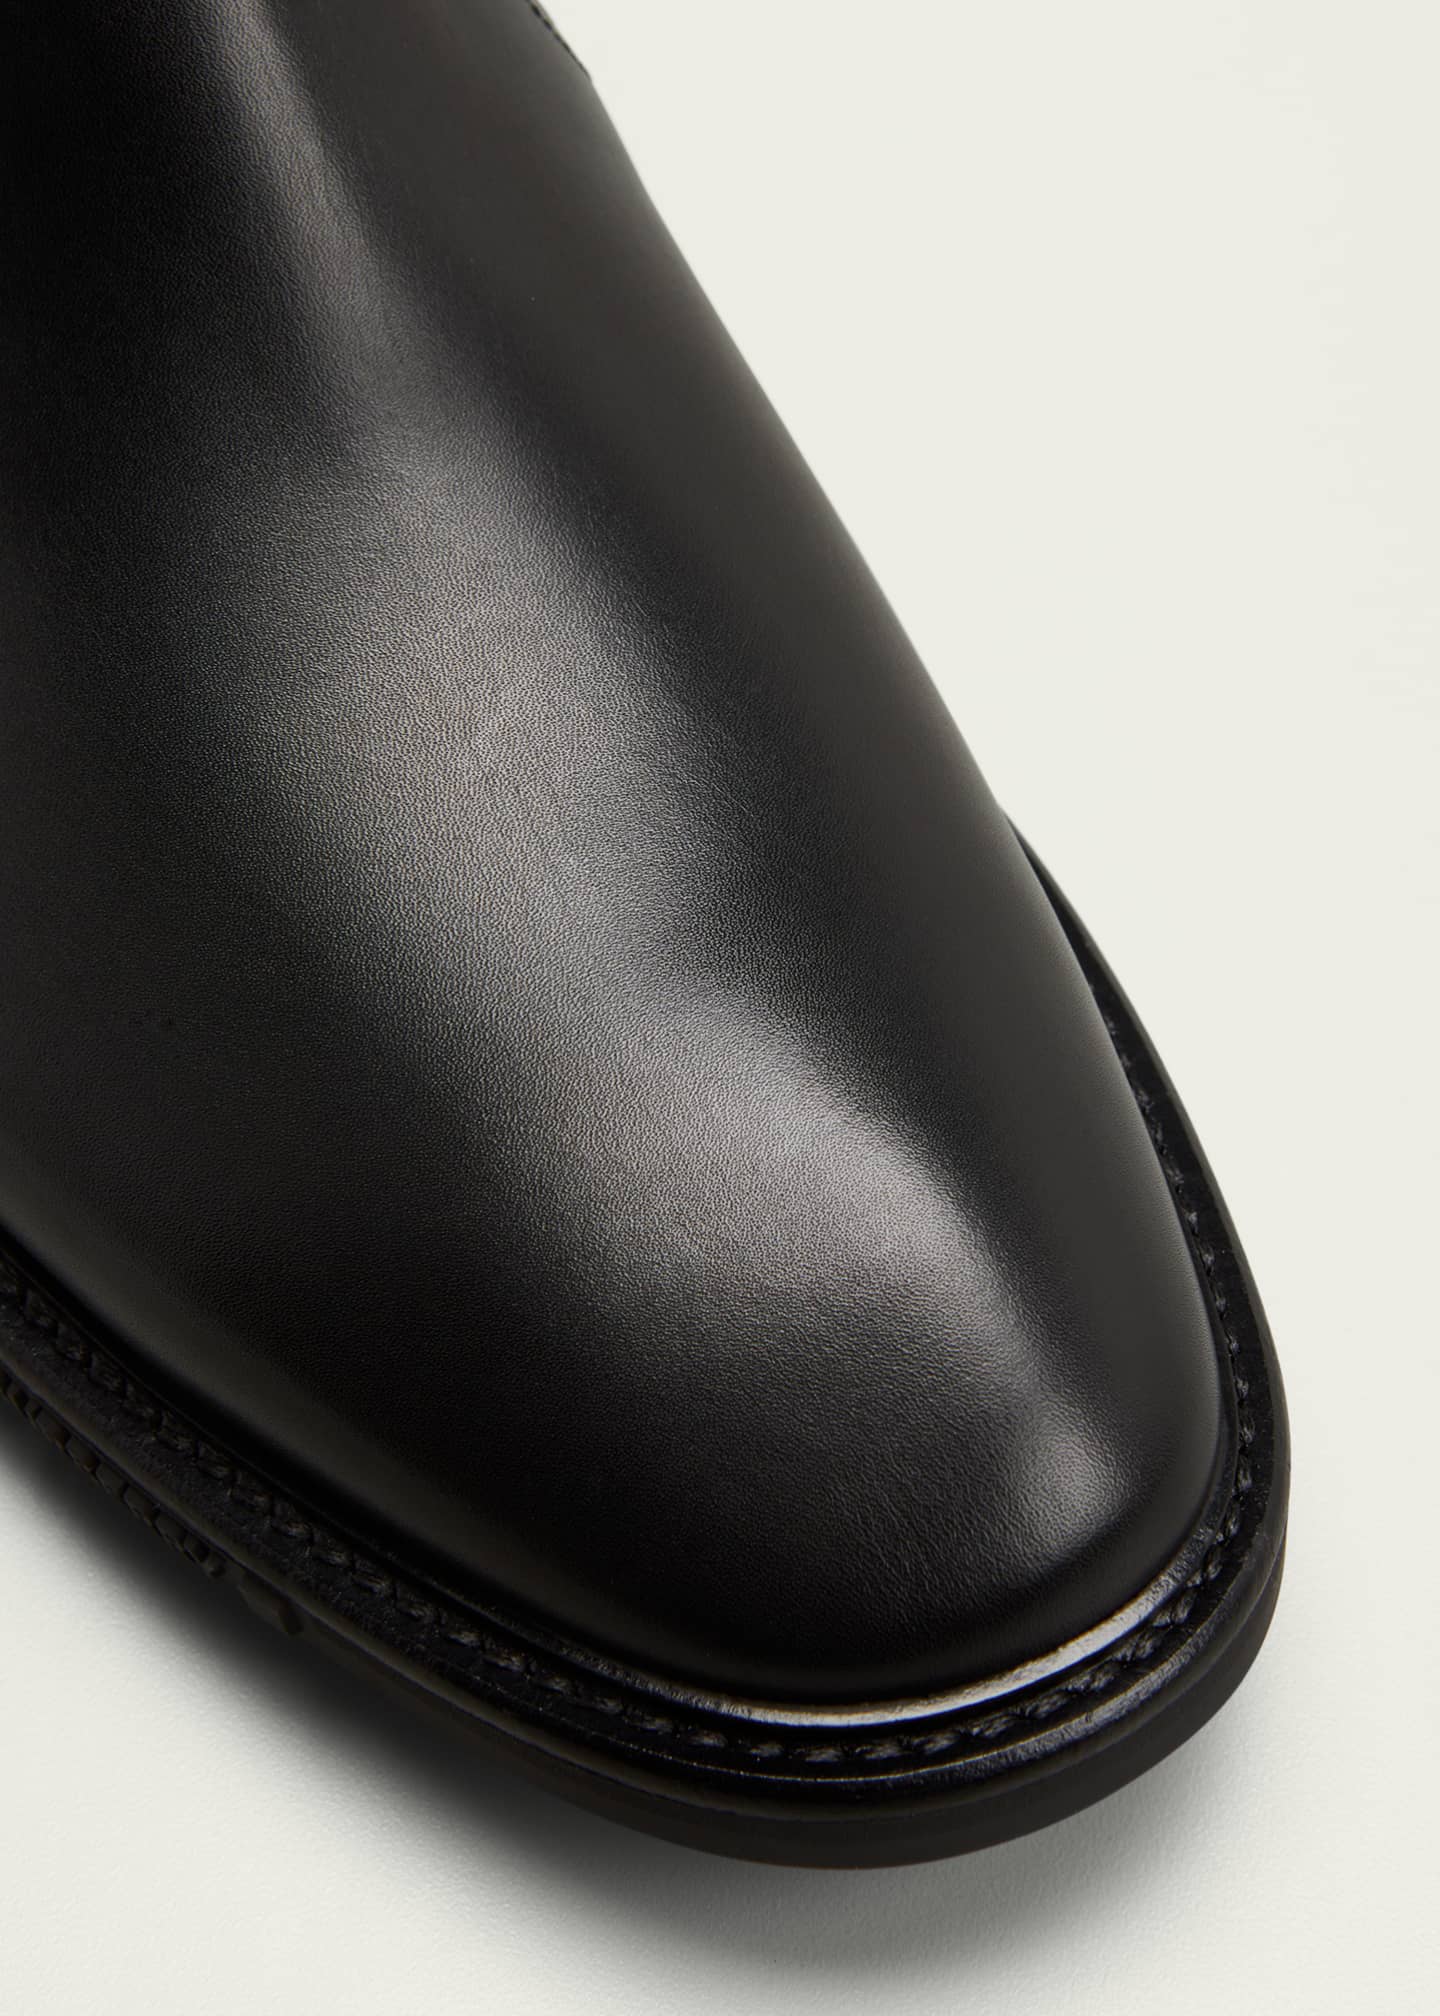 Burberry Men's Check-Print Leather Chelsea Boots - Bergdorf Goodman